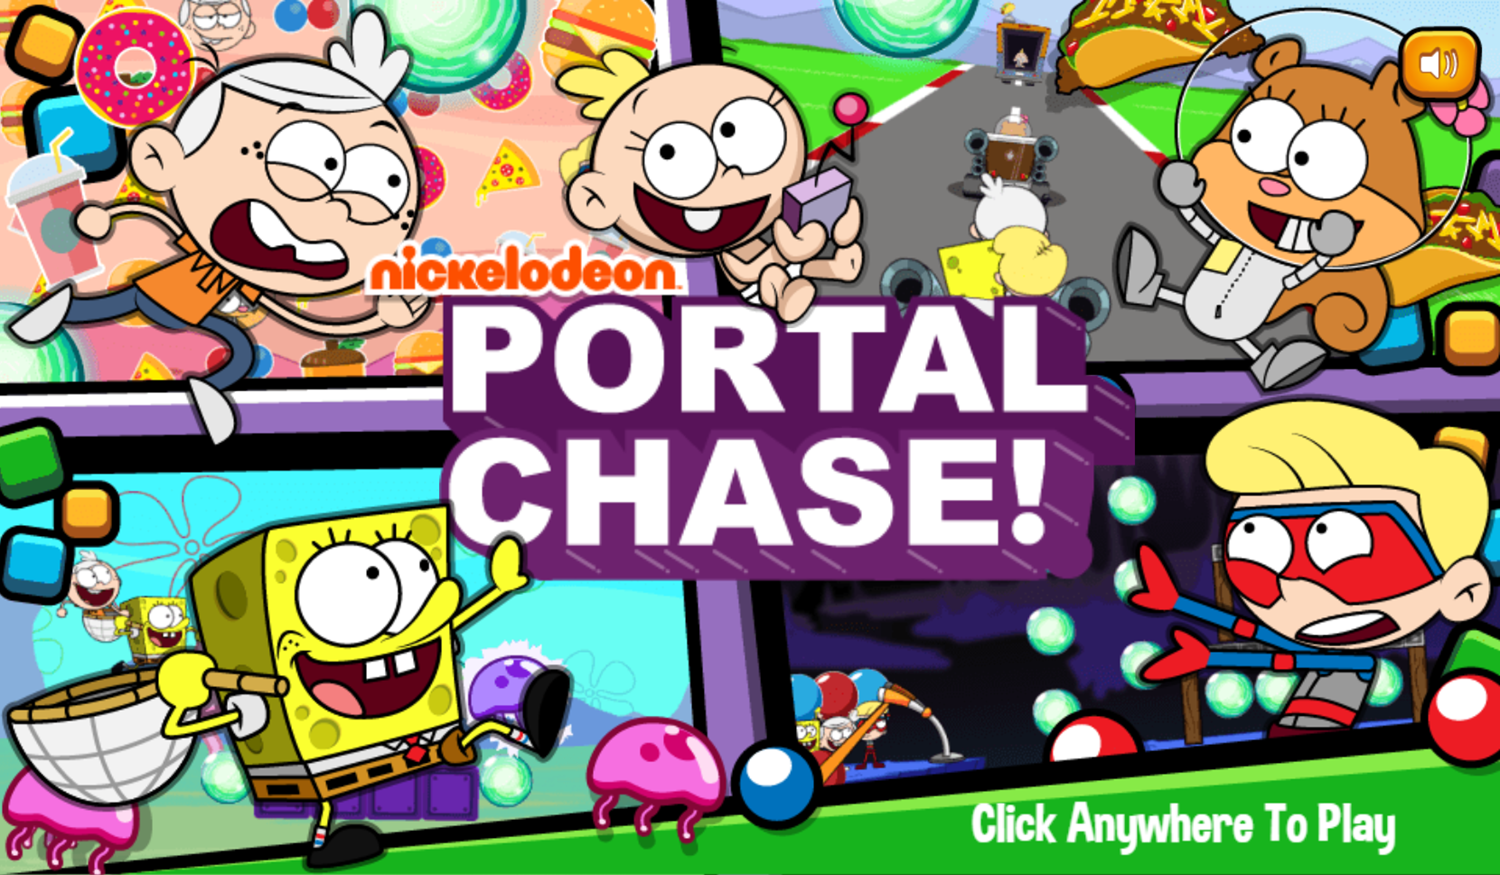 Portal Chase Game Welcome Screen Screenshot.